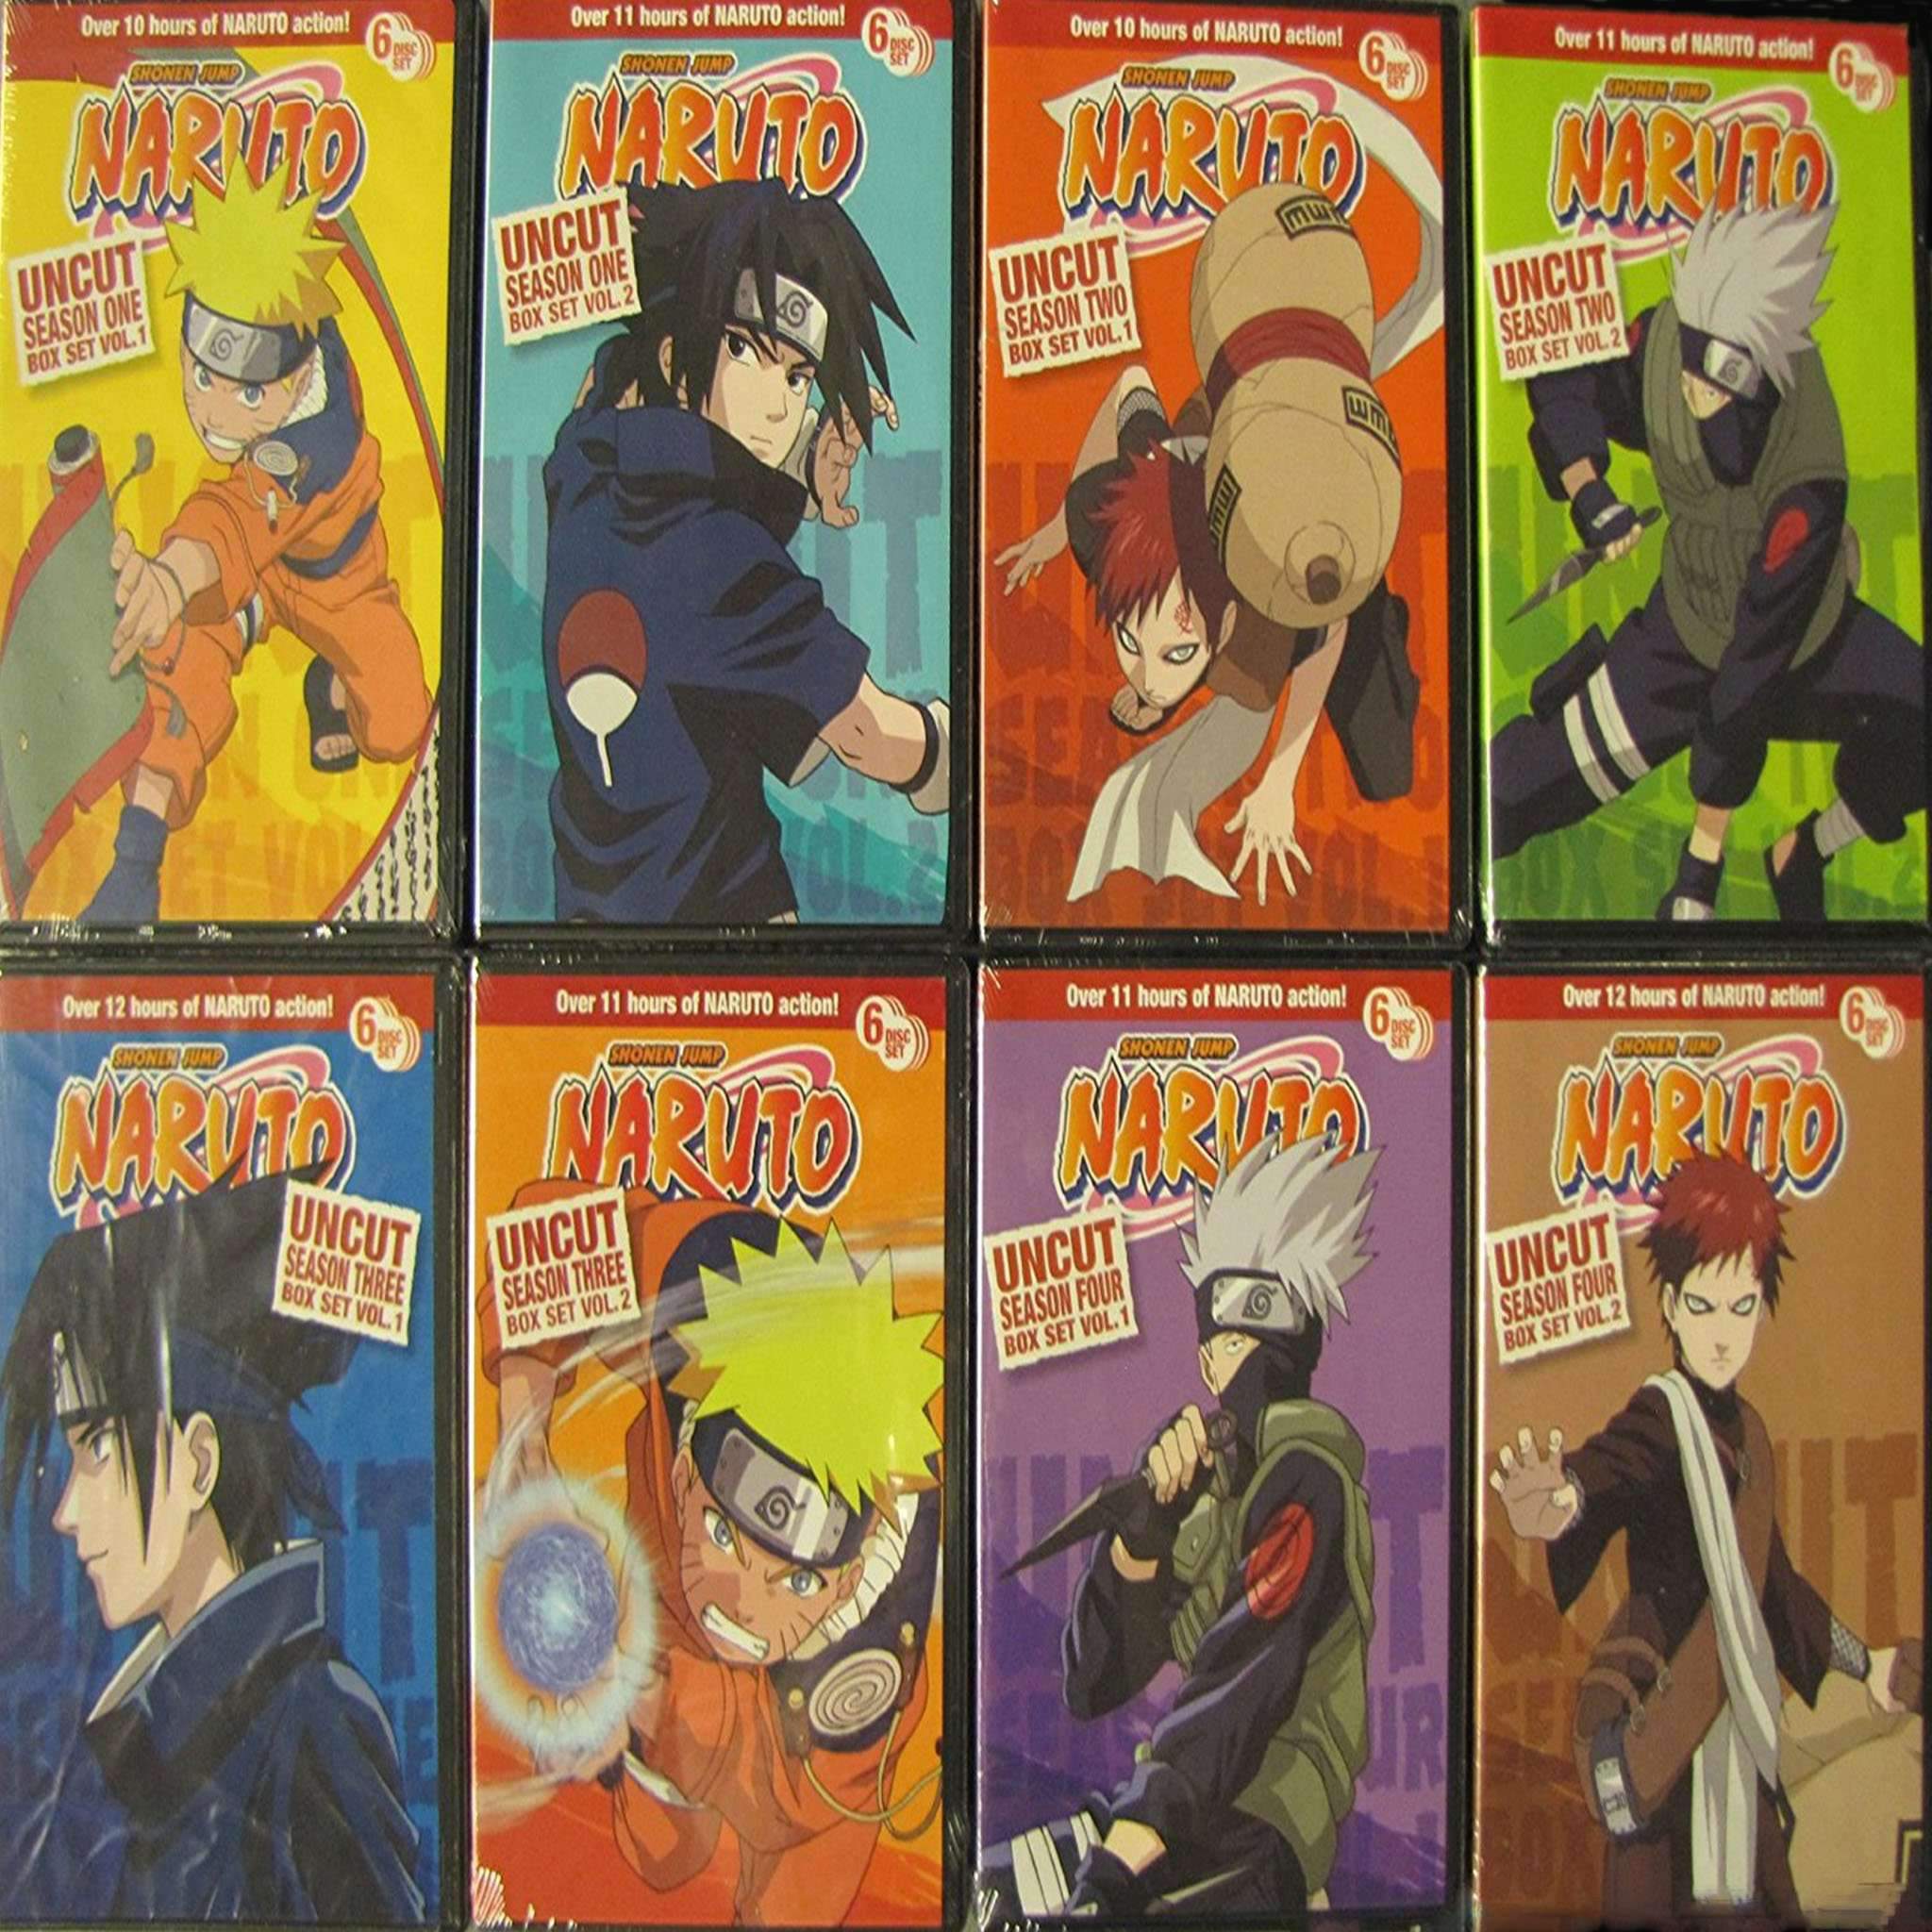 Naruto Shonen Jump Uncut Complete Series DVD Set